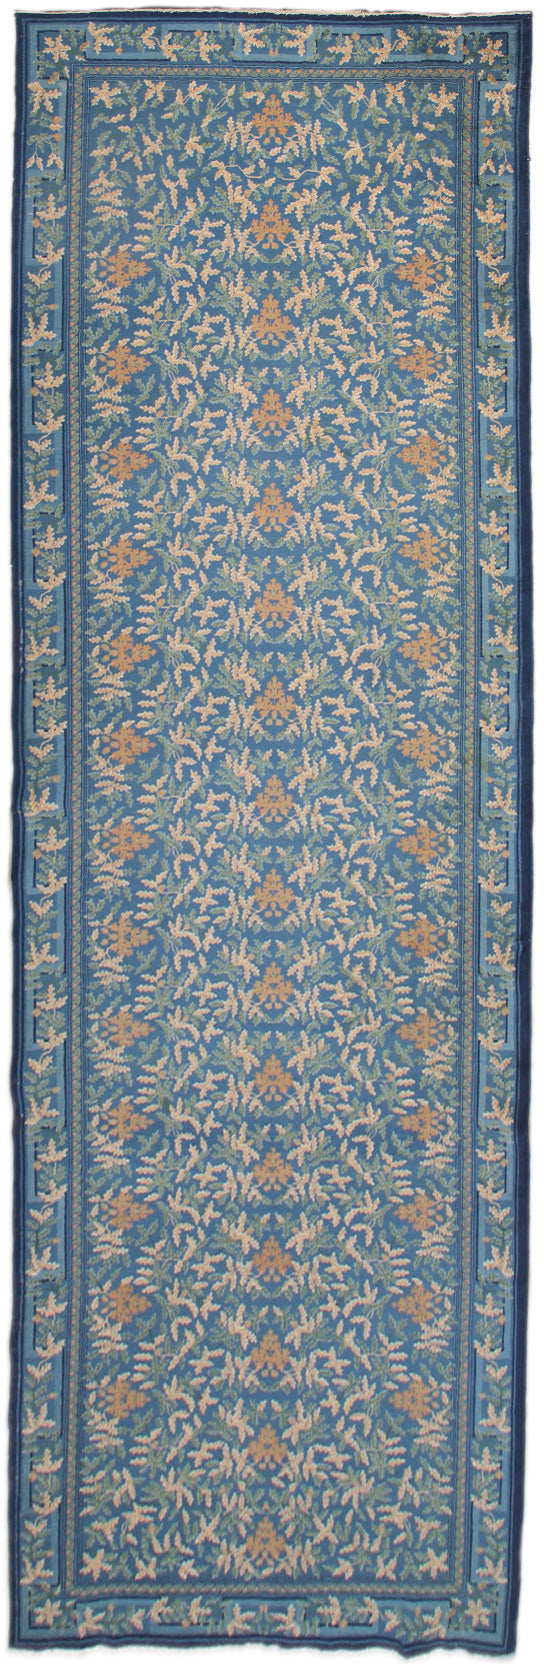 5'x17' Blue Floral Vintage Indian Gallery Runner Rug